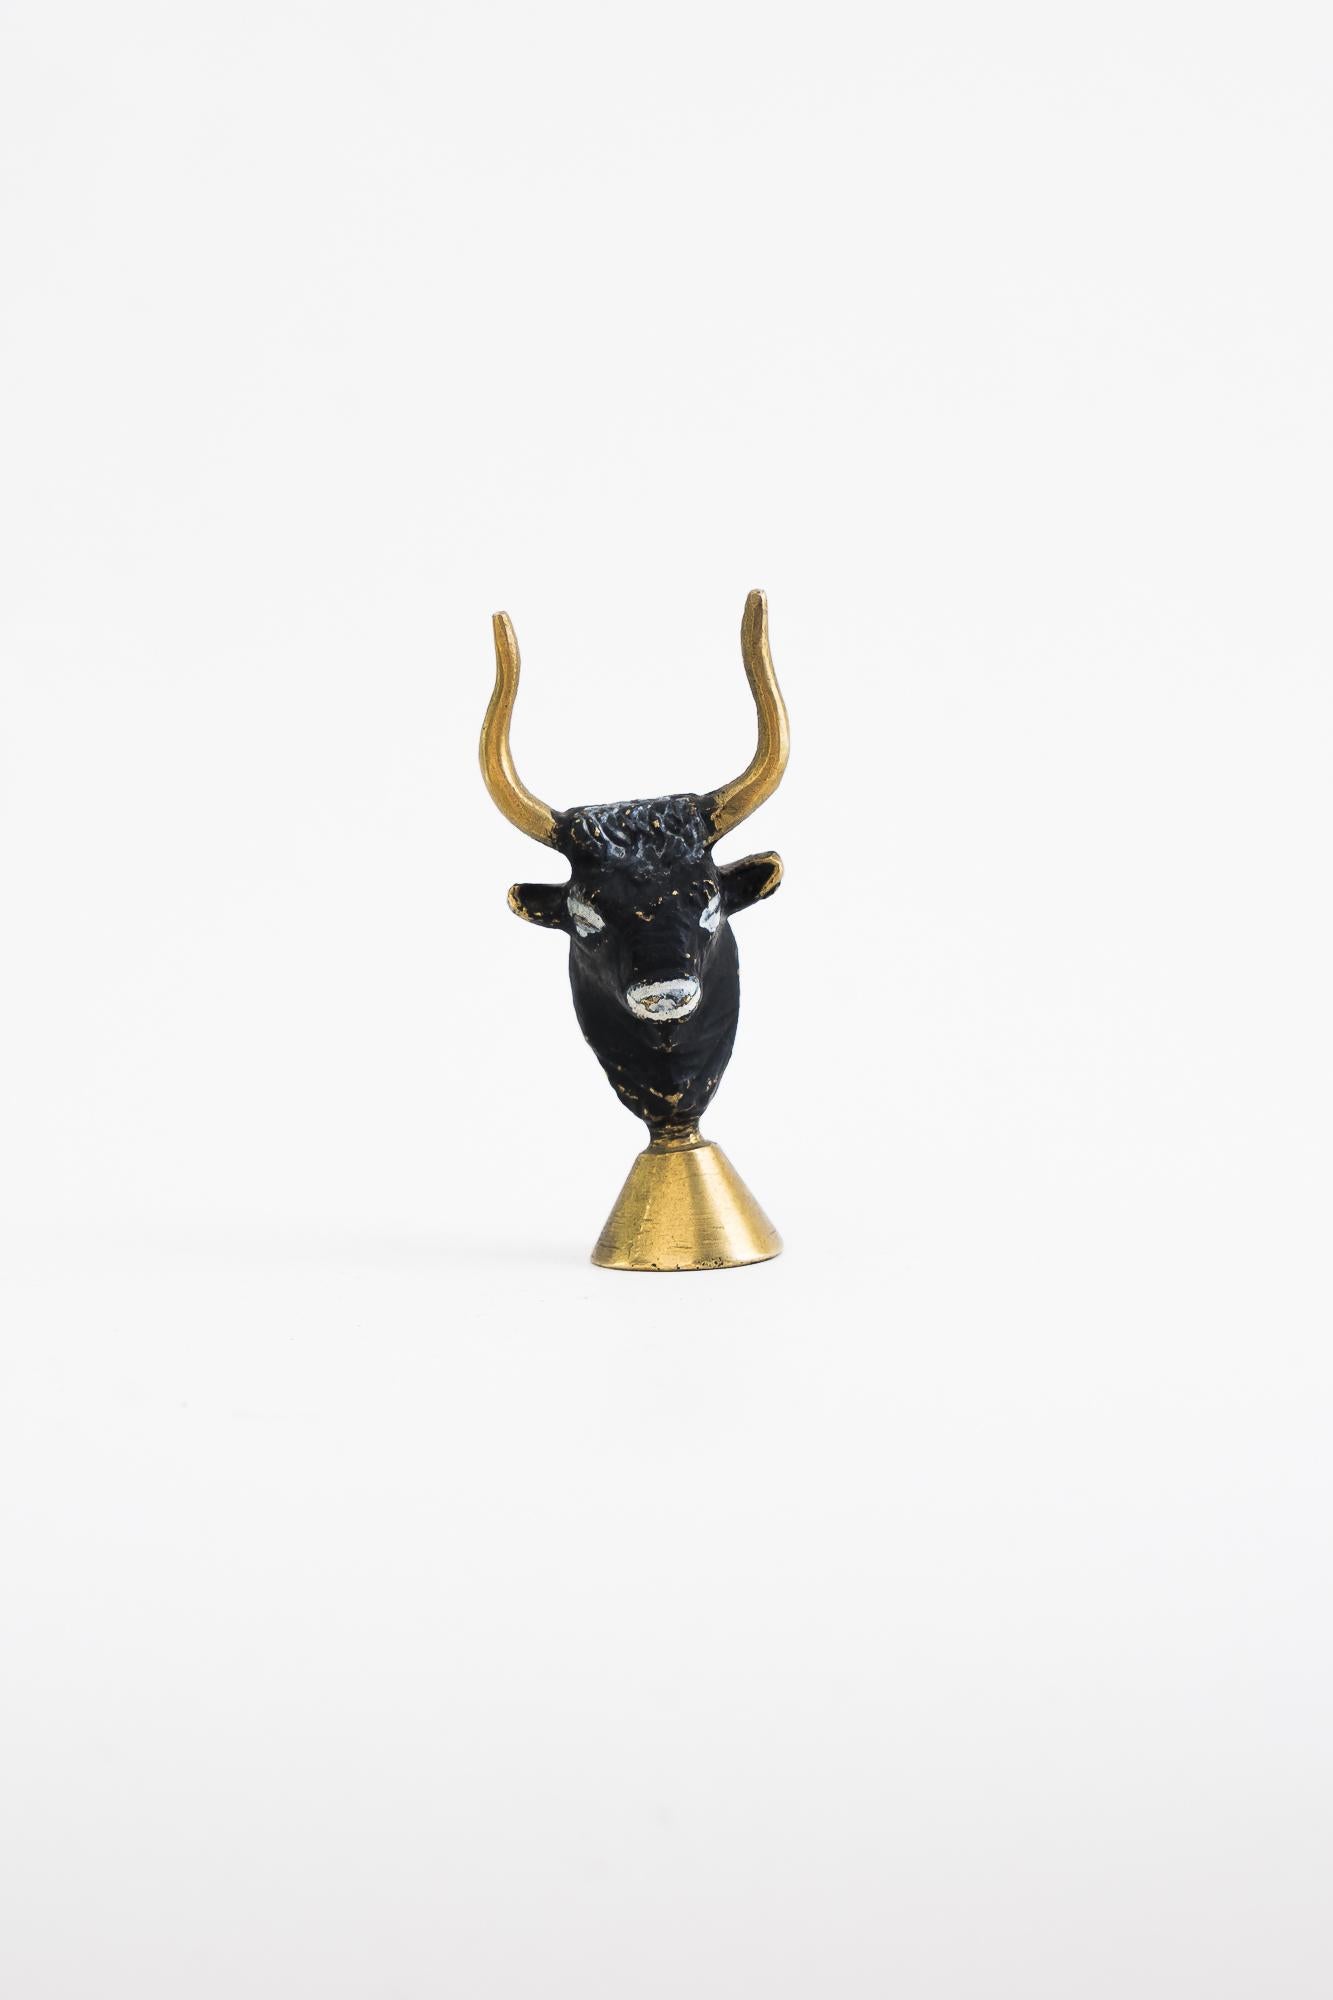 Bull head figurine by Walter Bosse vienna around 1950s
Original condition.